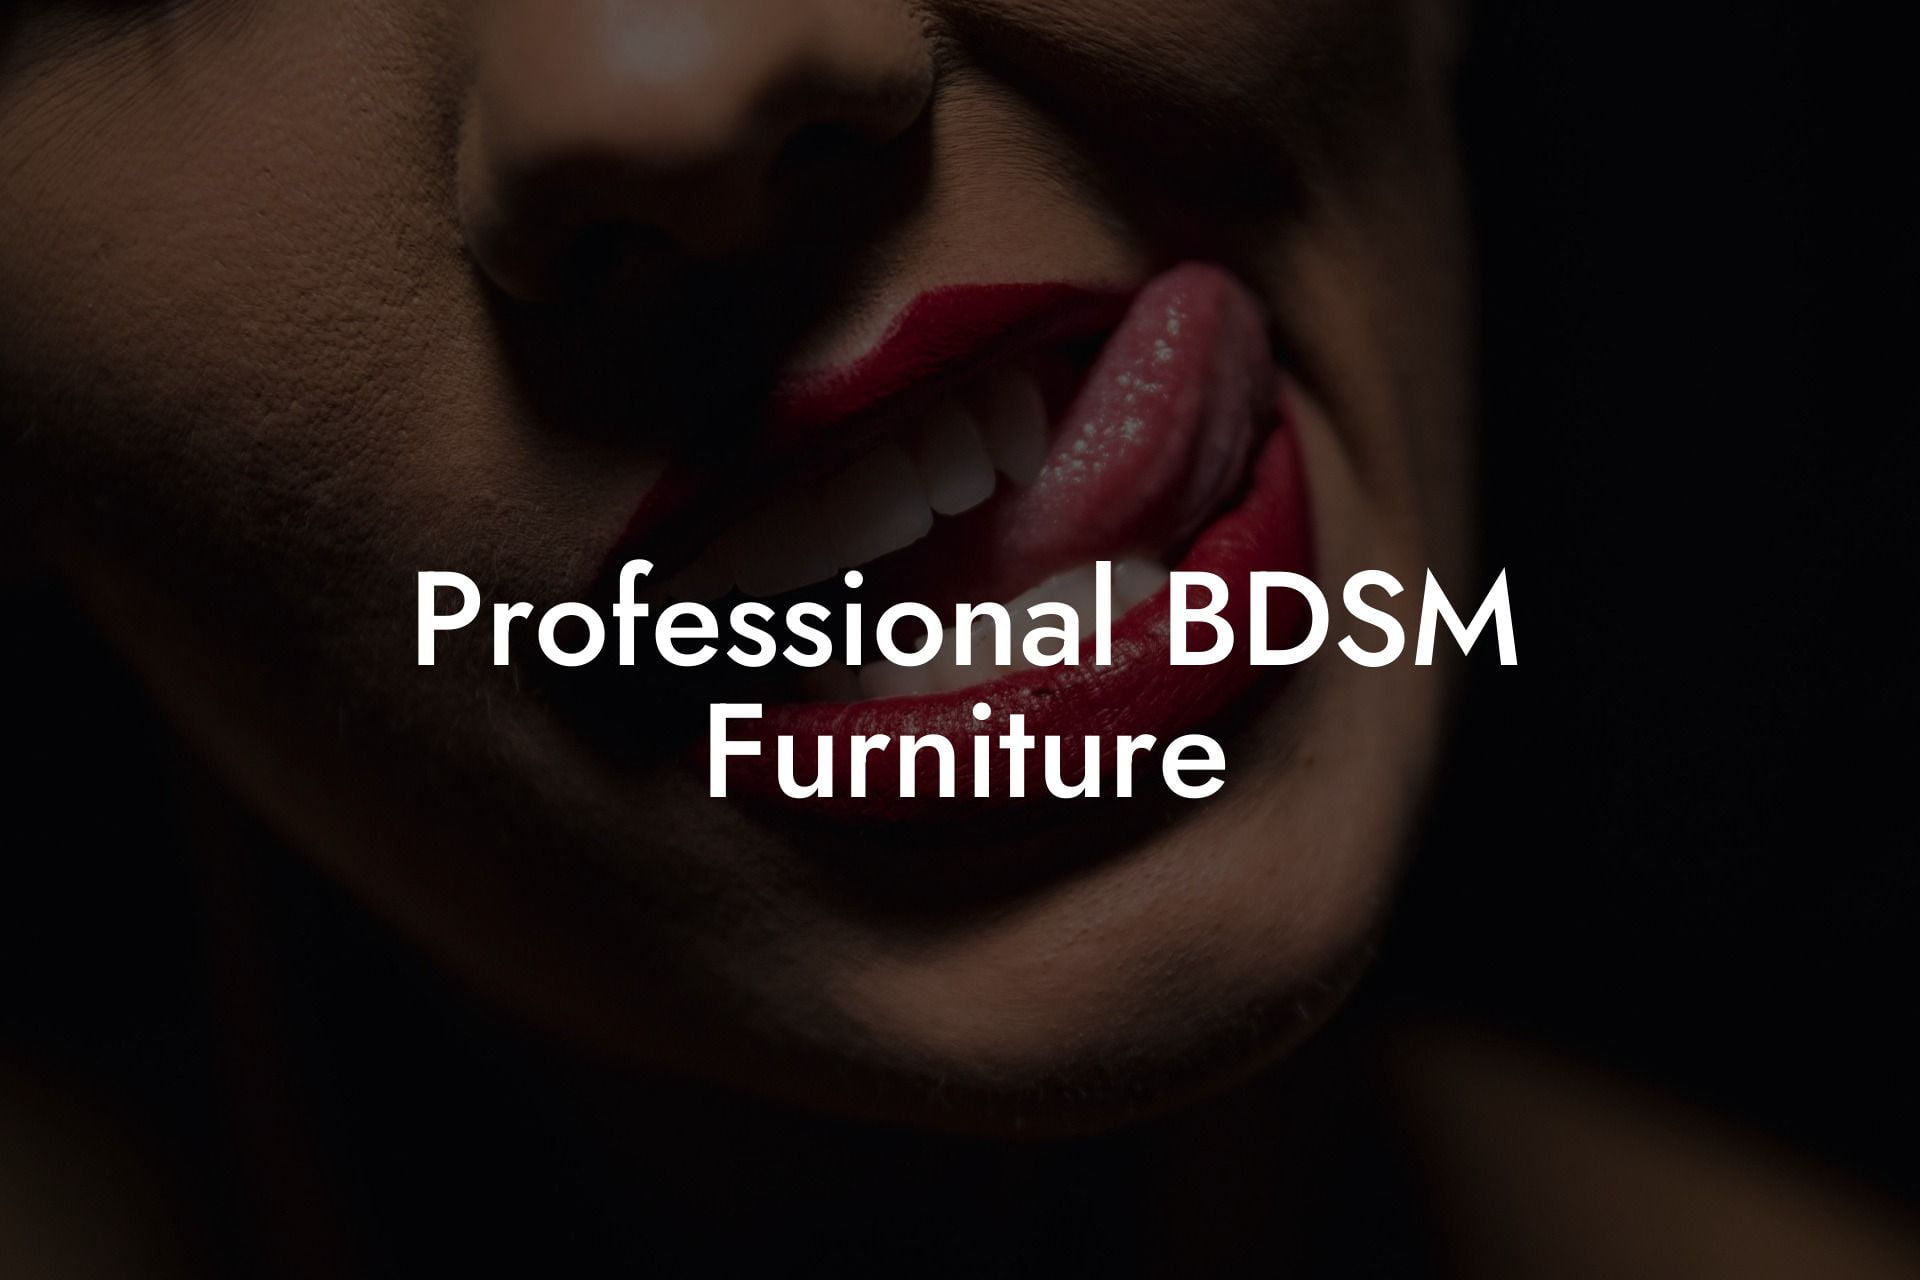 Professional BDSM Furniture